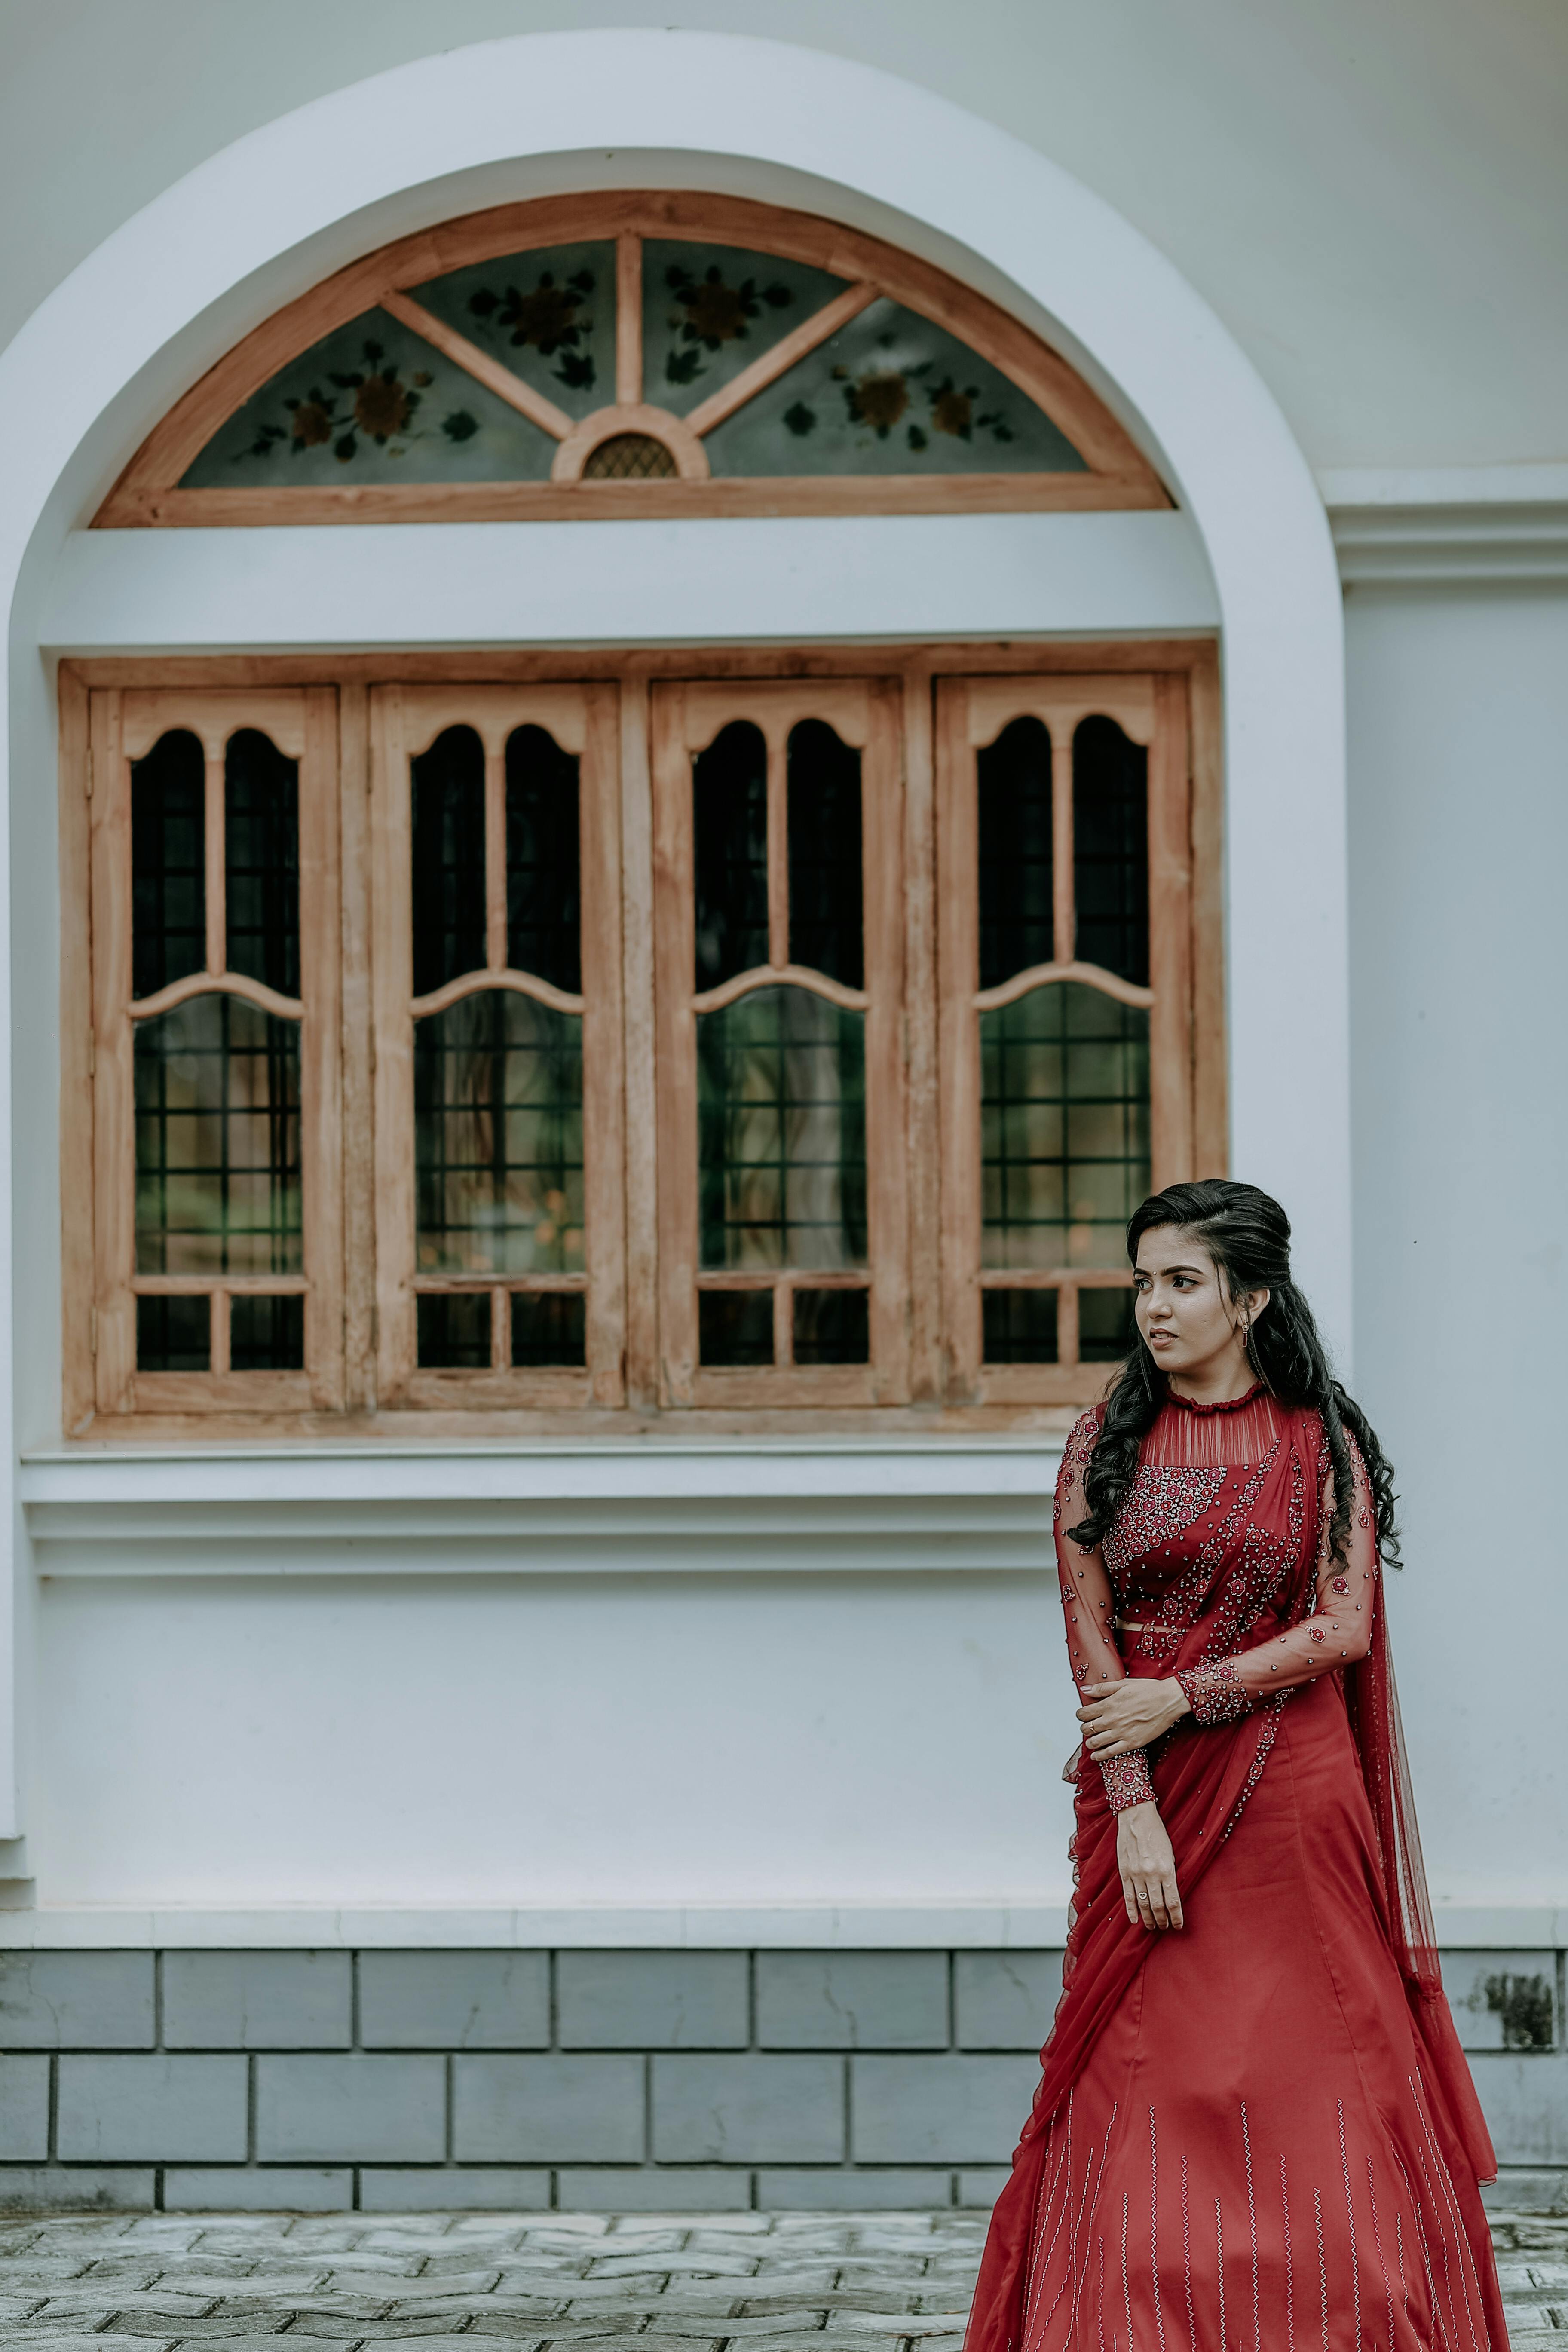 Simple & beautiful saree poses photo images for Girls & ladies